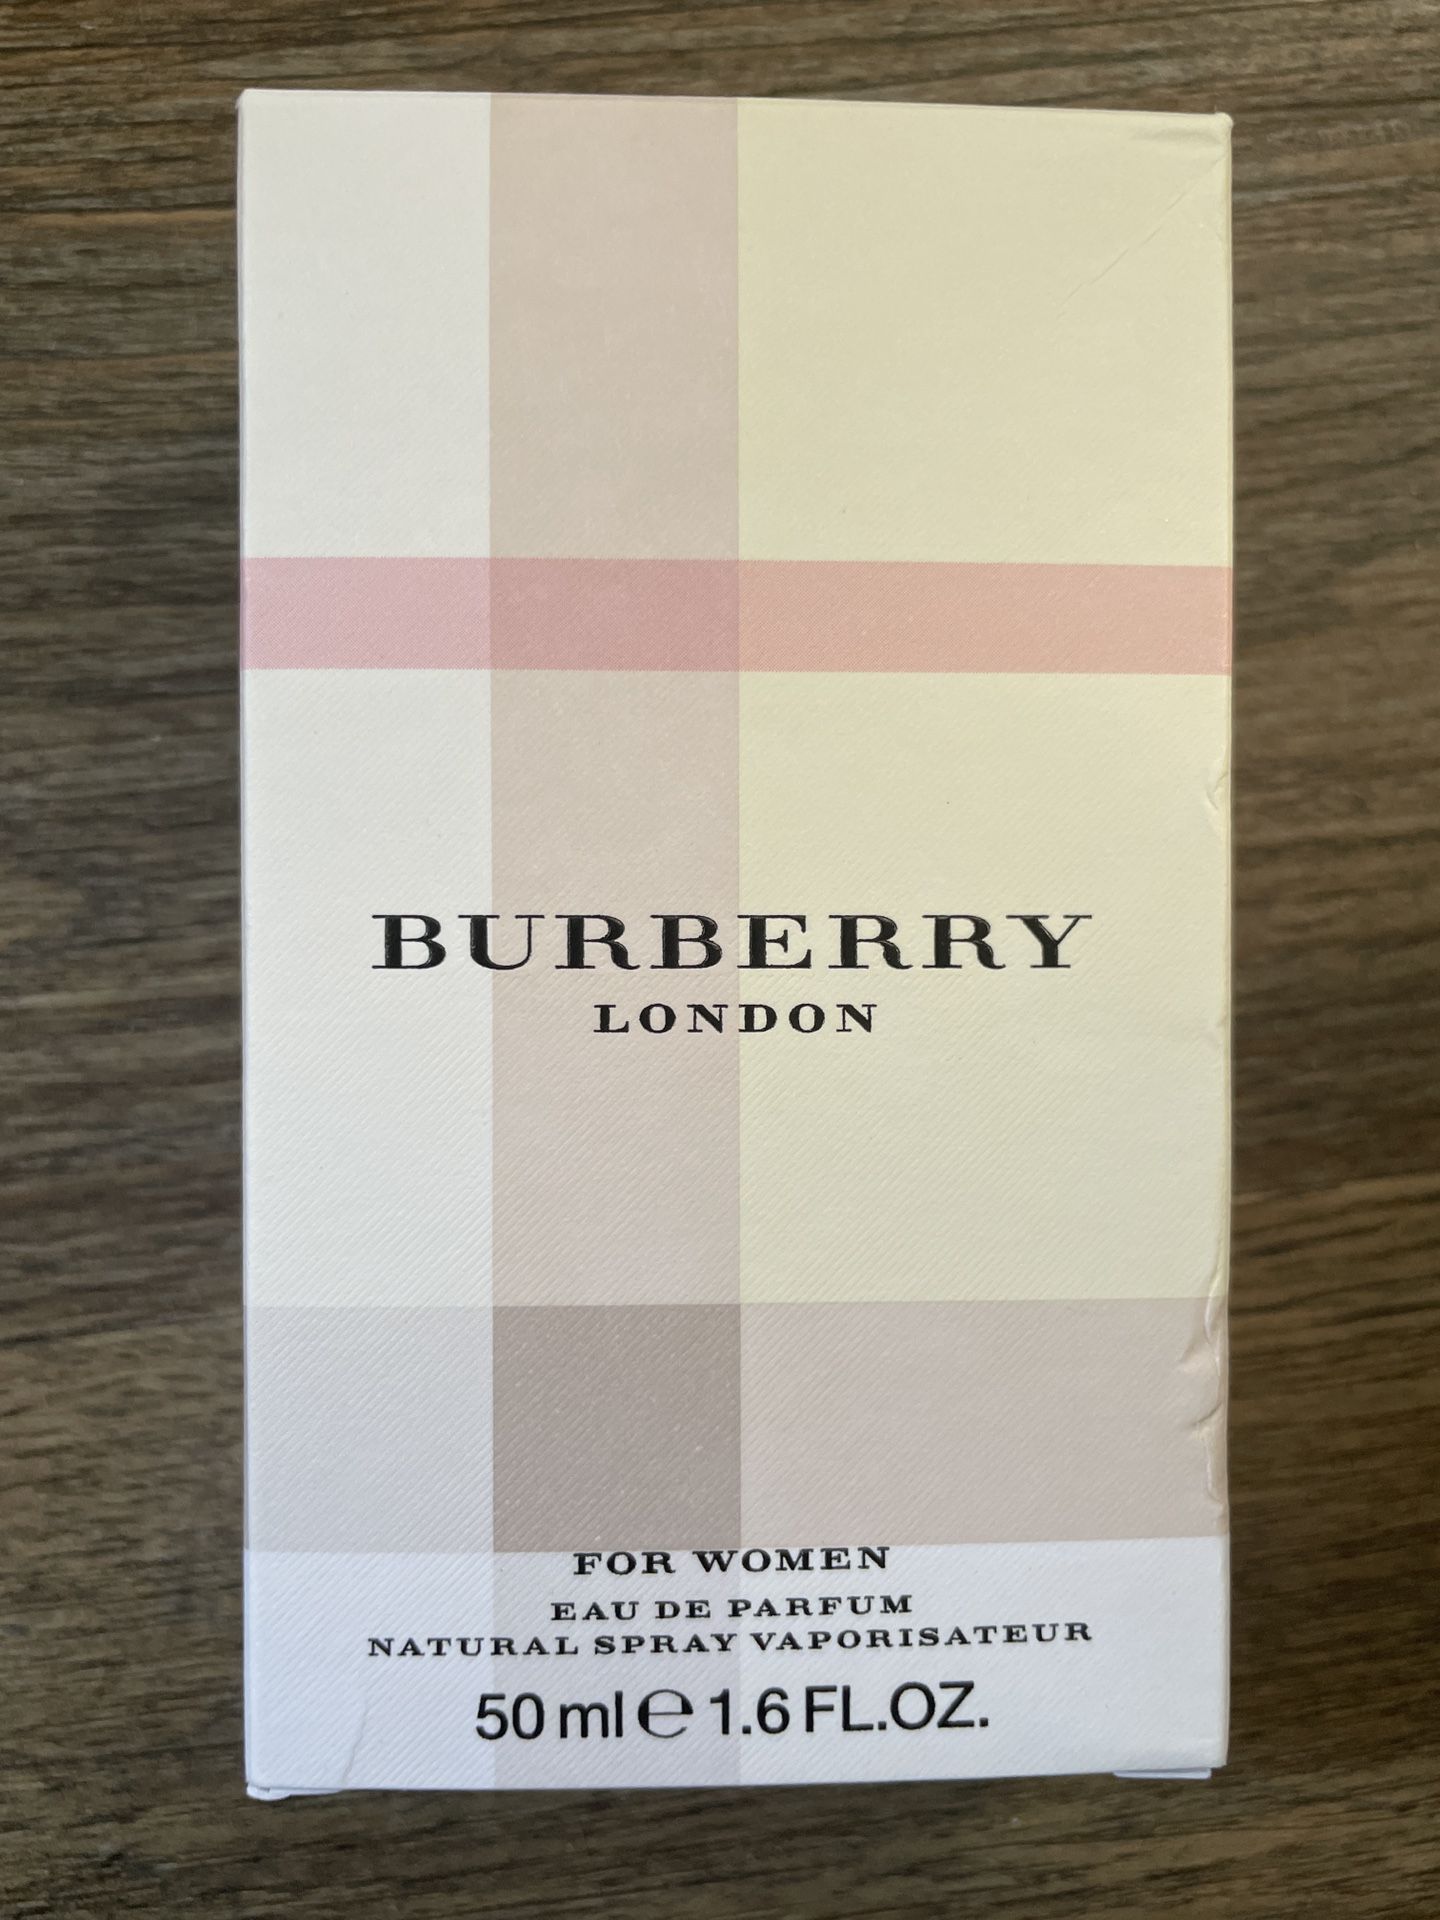 Burberry London For Women 50ml